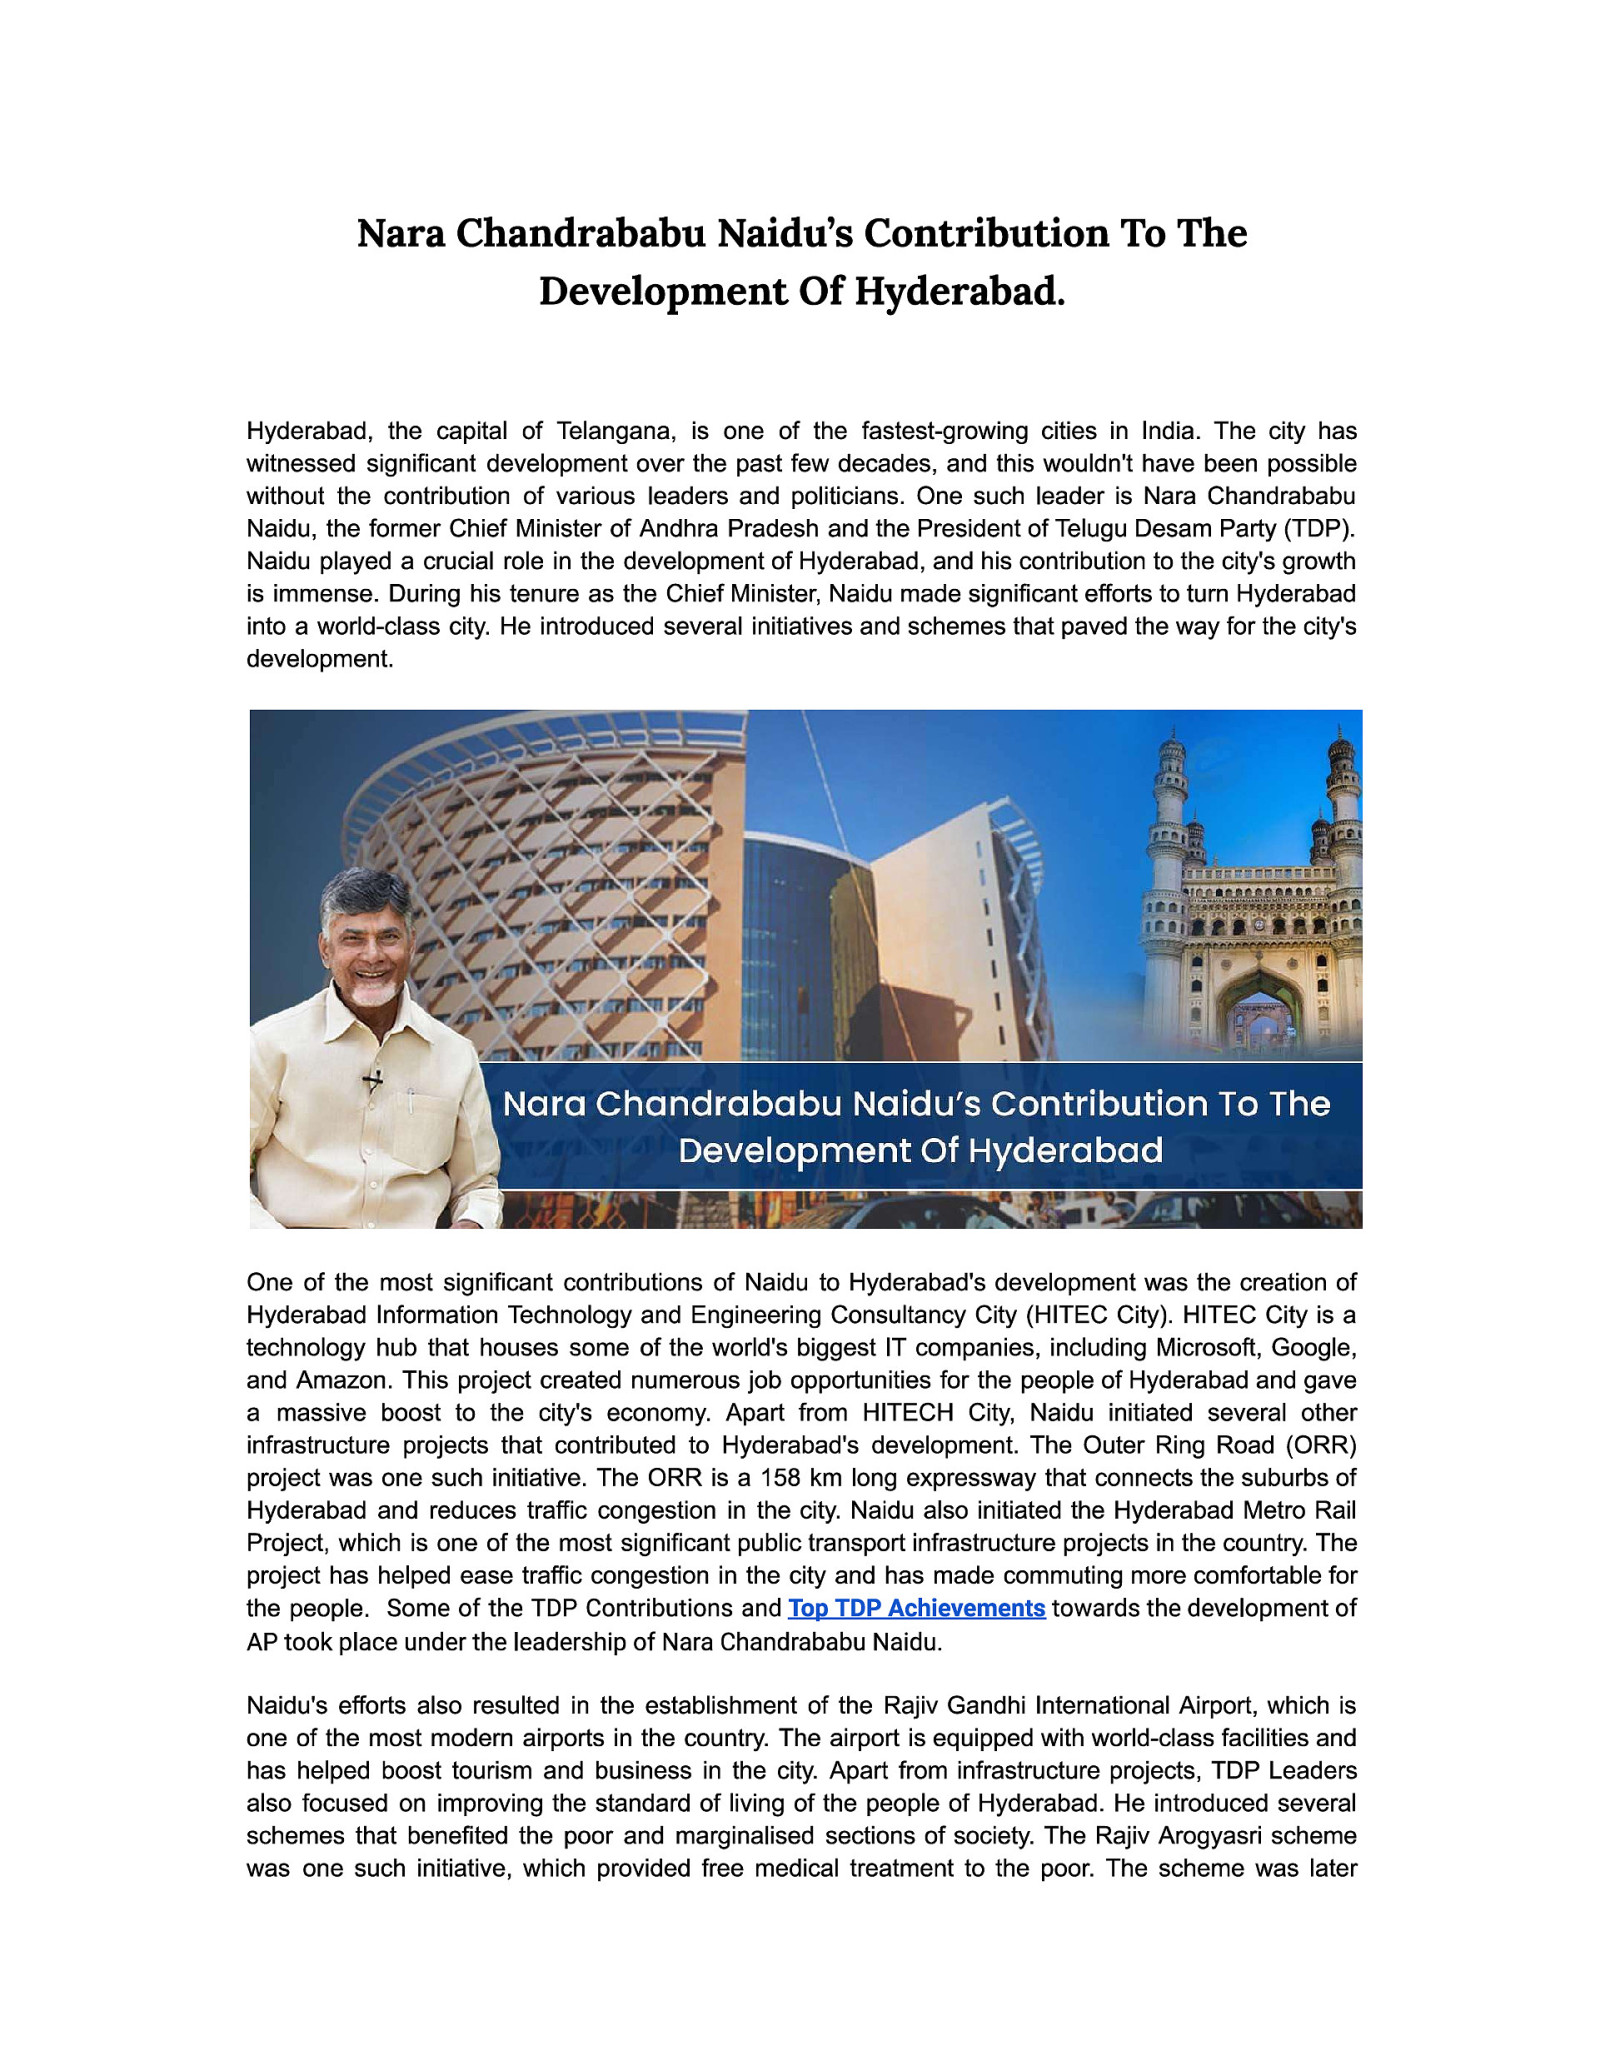 Nara Chandrababu Naidu’s Contribution To The Development Of Hyderabad.